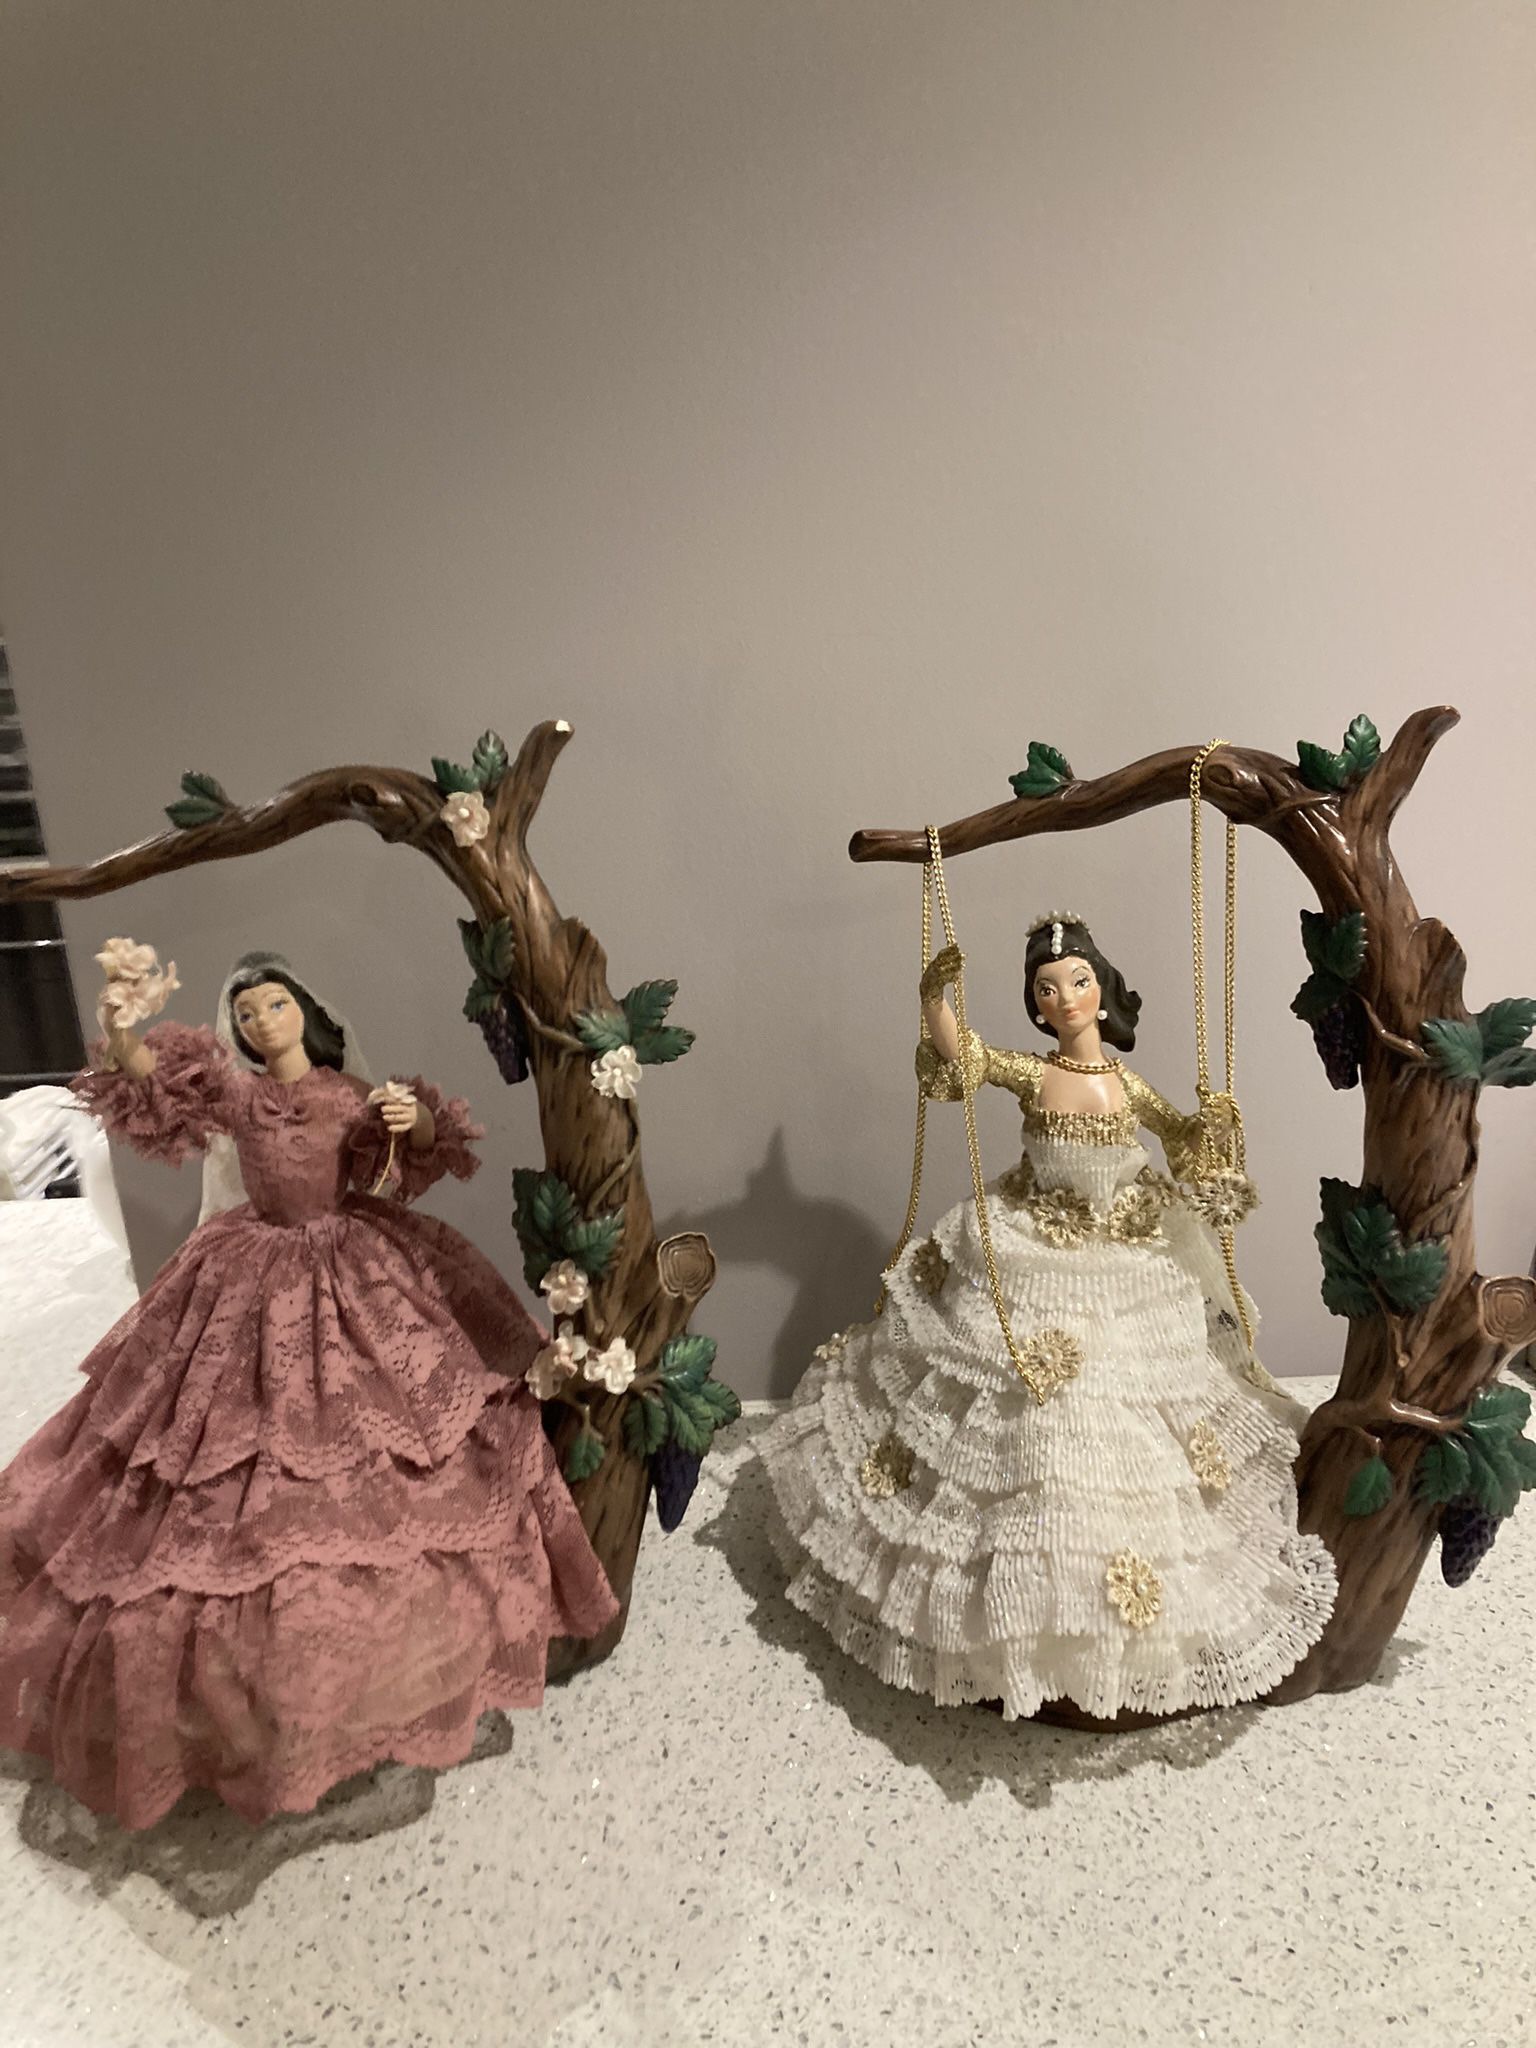 Pair Of Figurines